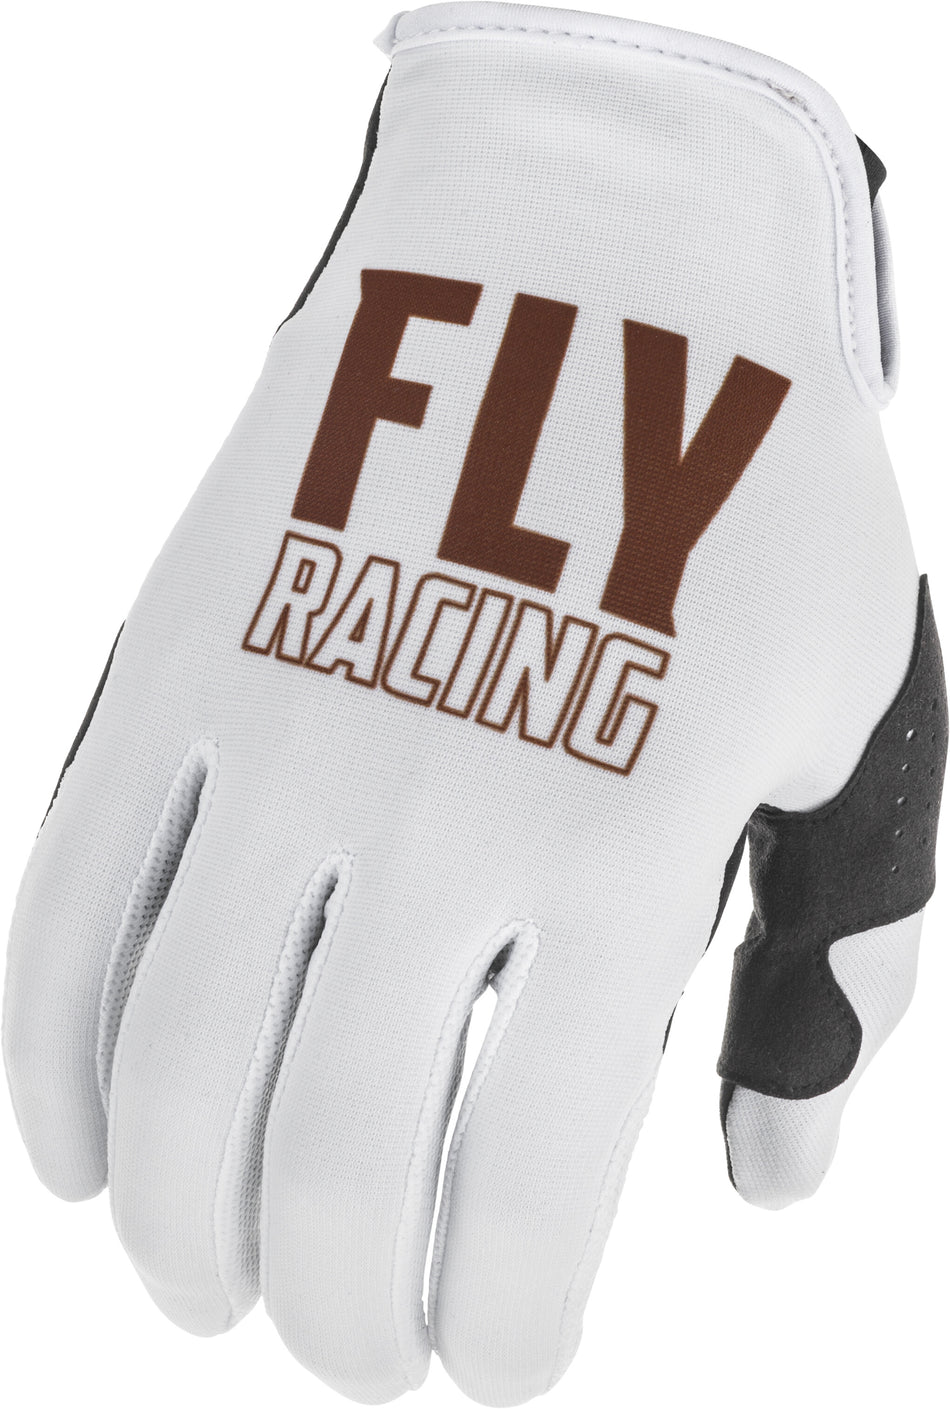 FLY RACING Lite L.E. Gloves White/Copper Sz 11 374-71911